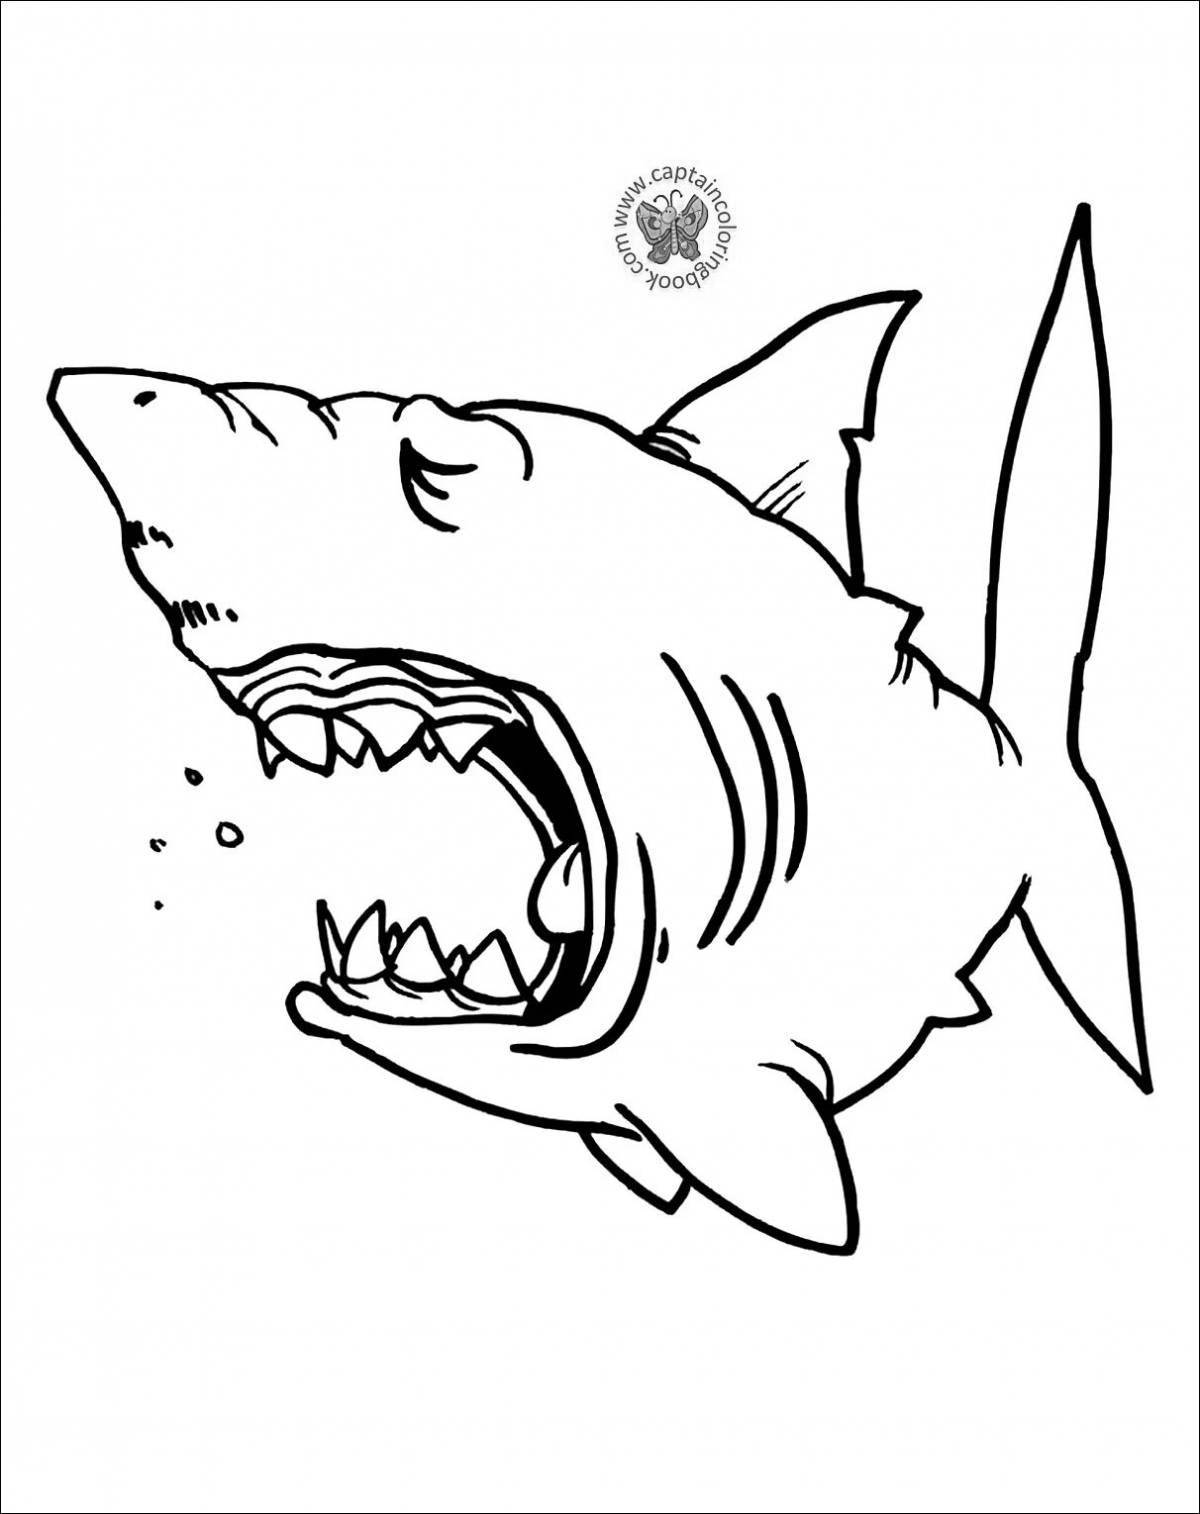 Coloring book shining angry shark